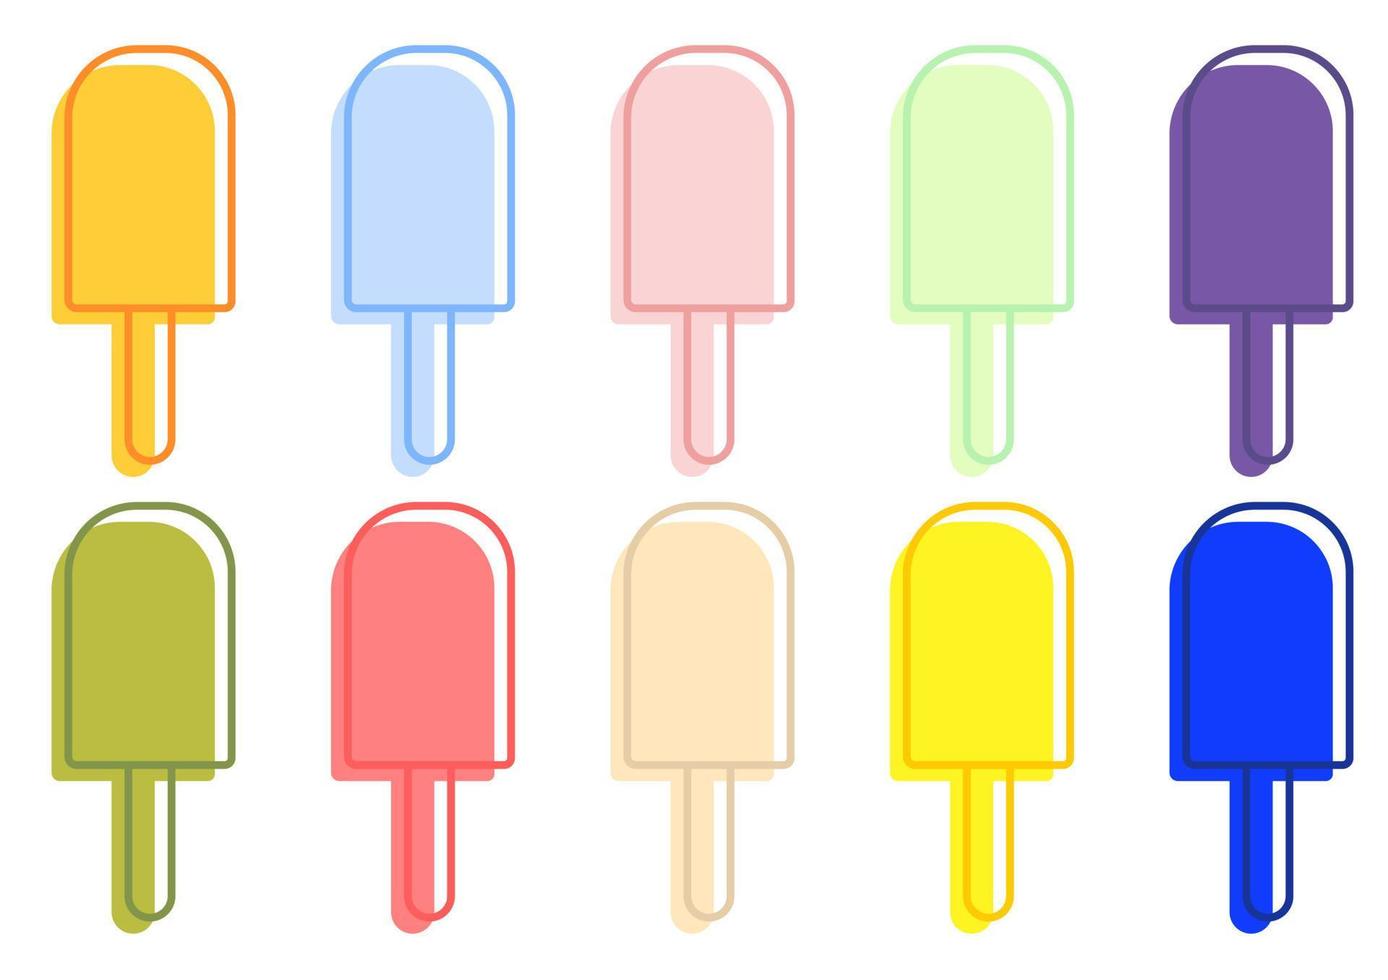 una collezione di semplici gelati colorati vettore